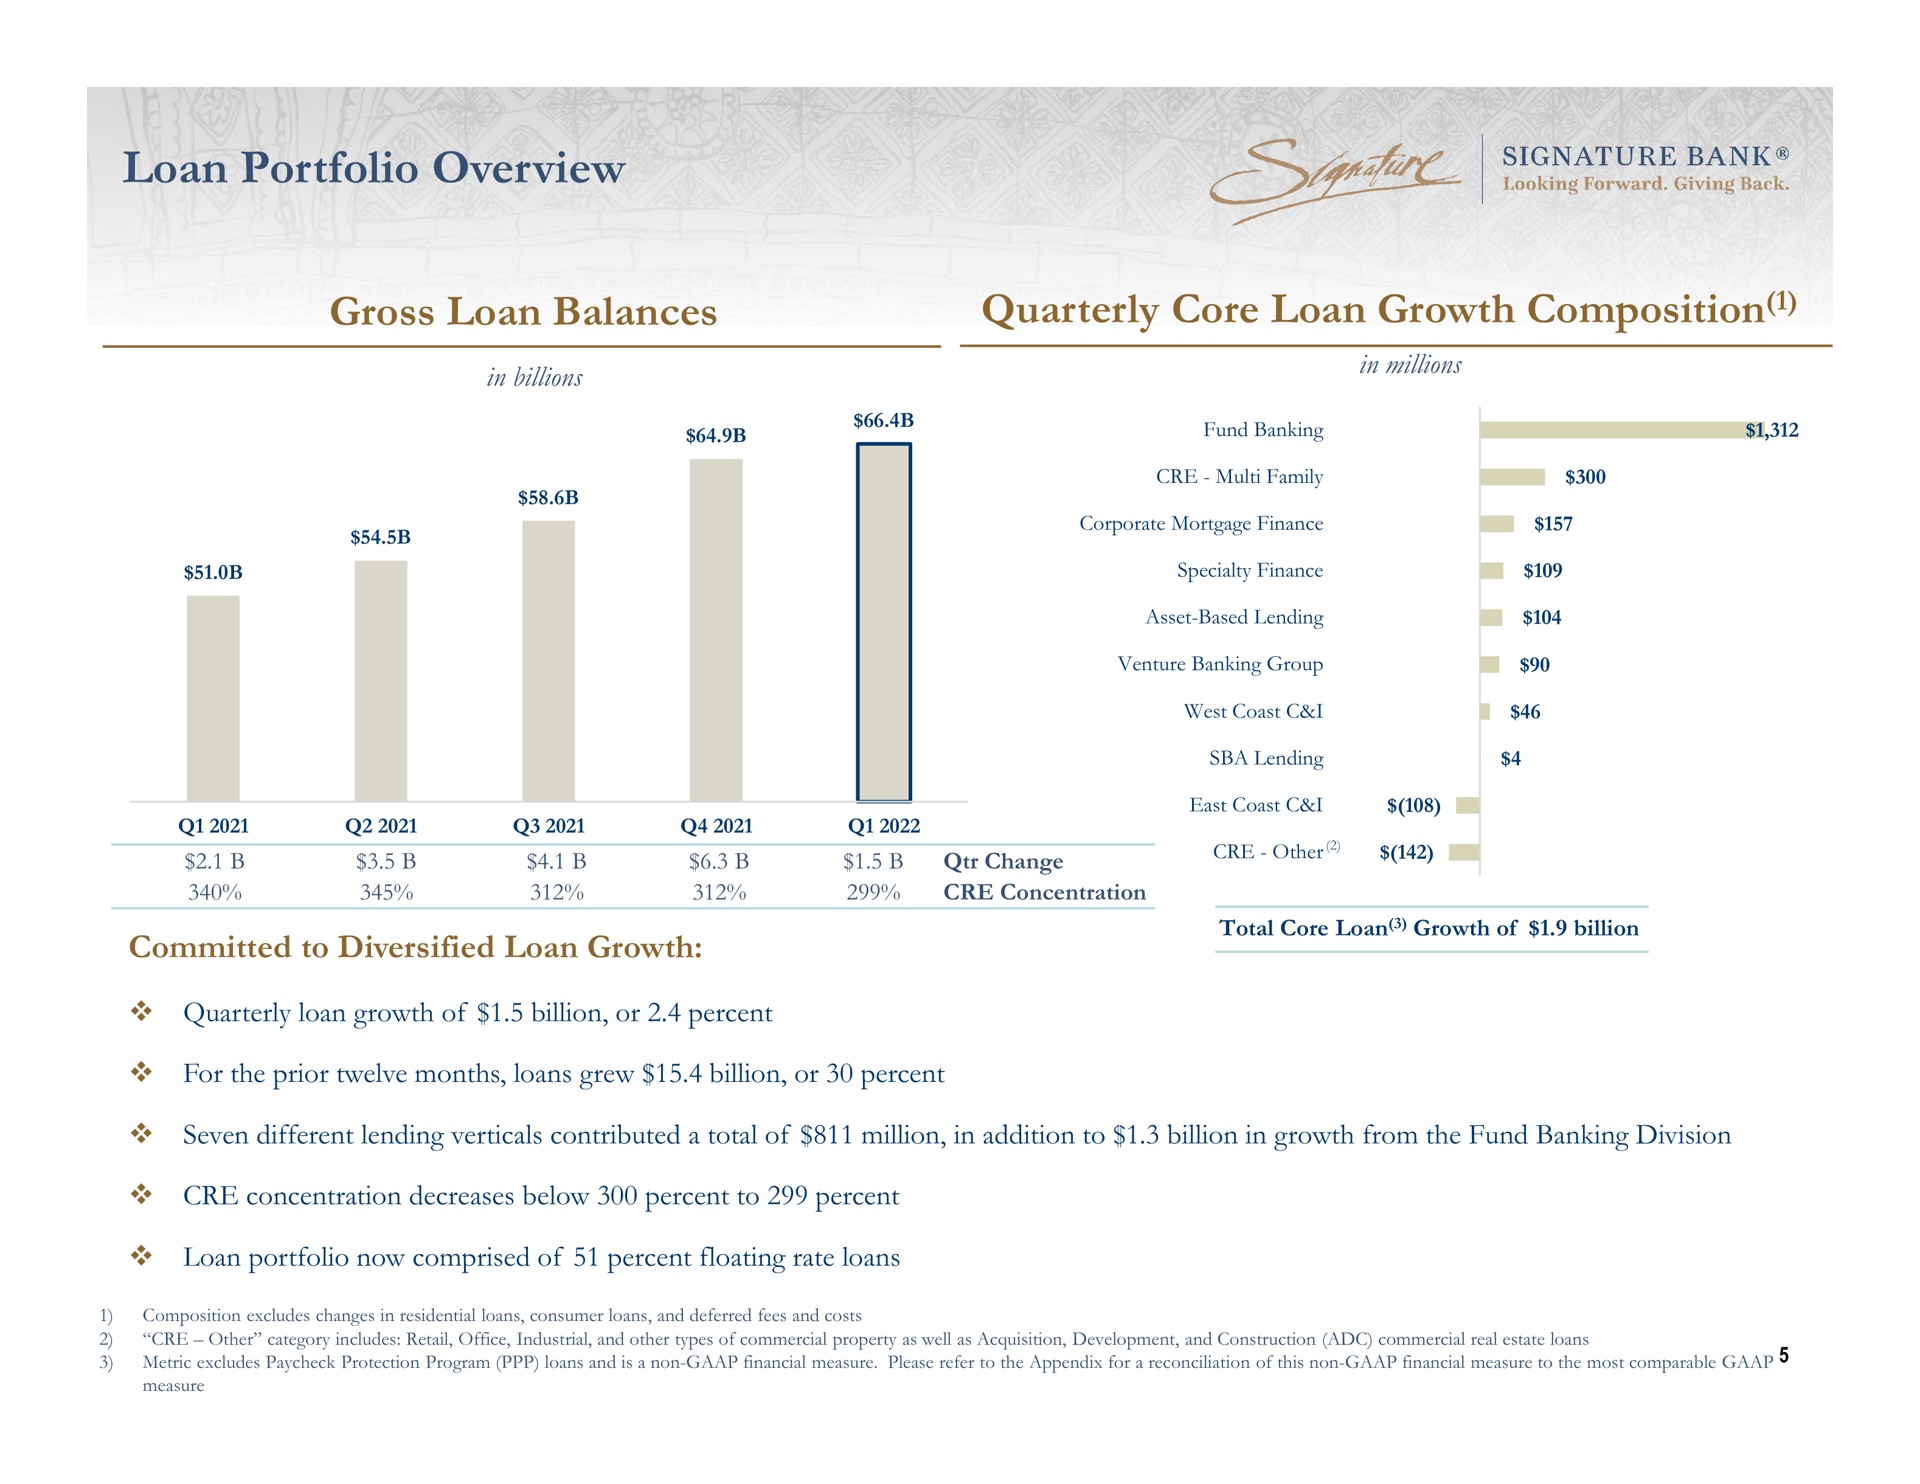 loan portfolio overview gross loan balances quarterly core loan growth composition | Signature Bank